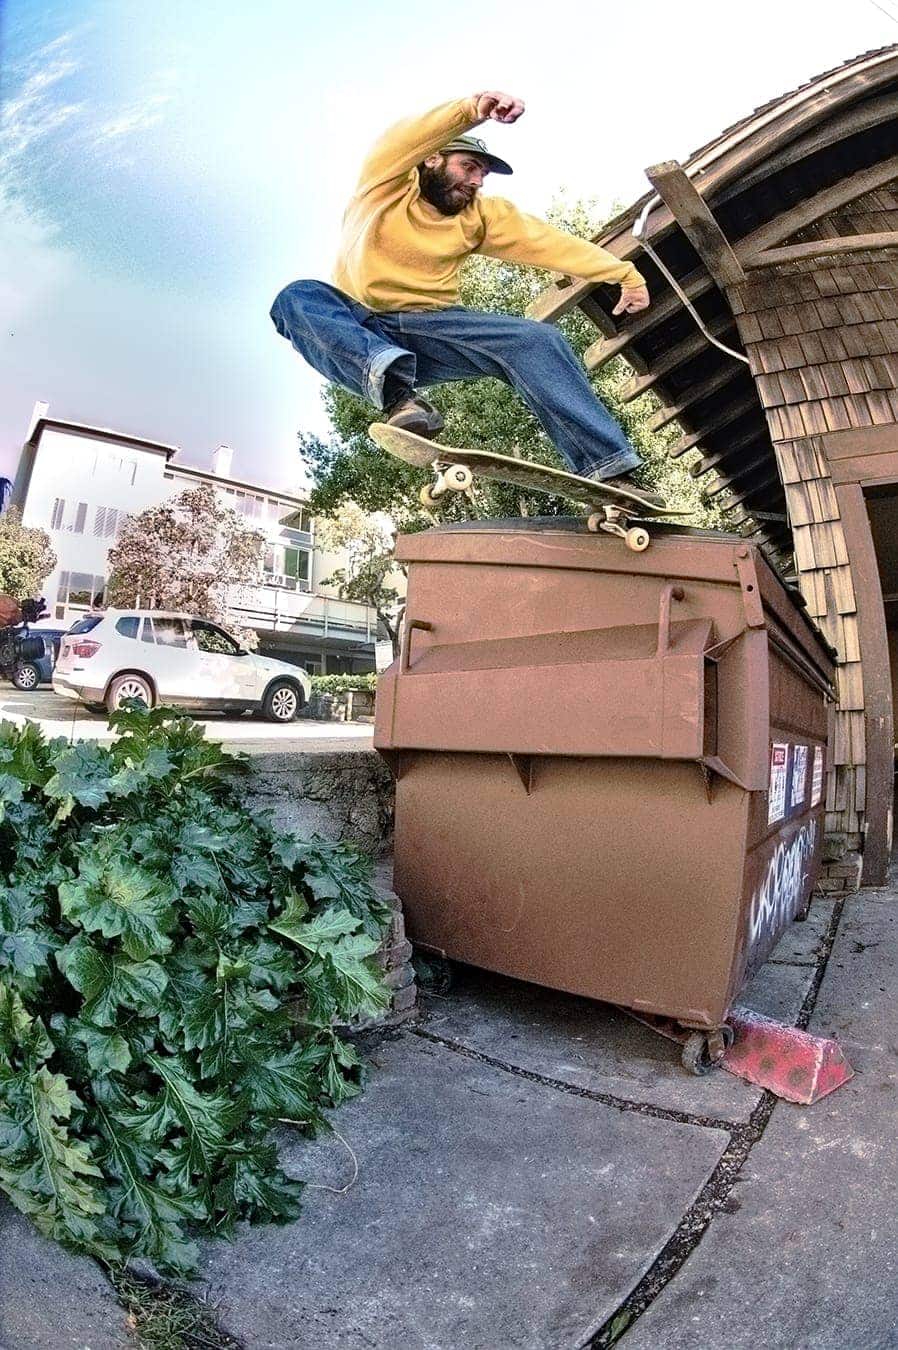 DJ Rosa - Bump to dumpster crook. Photo by Chris Morgan Creative.